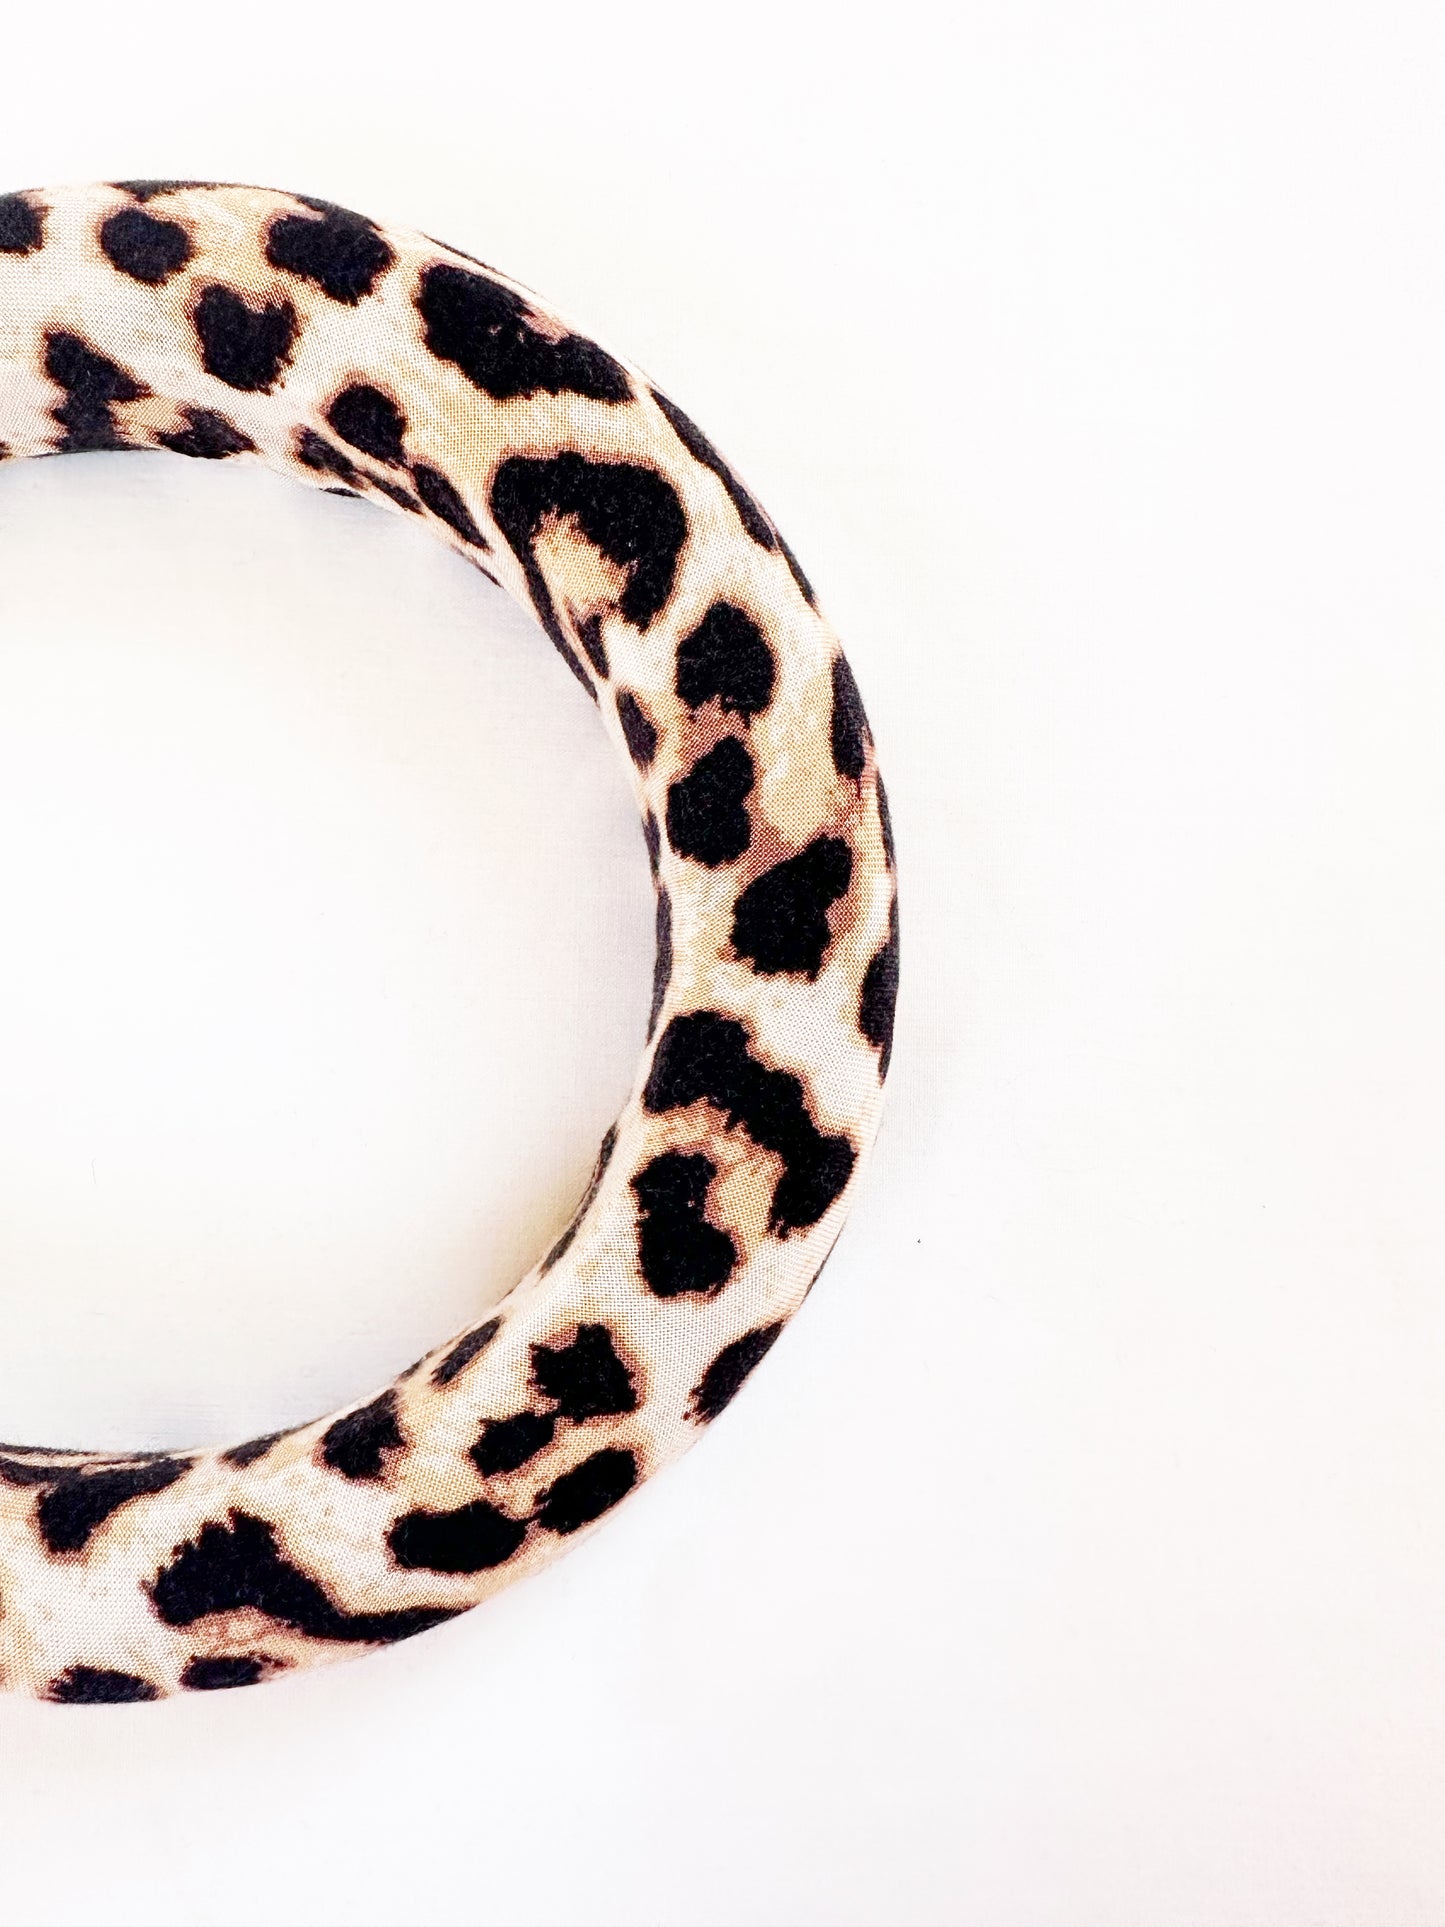 Padded Headband in Leopard Print